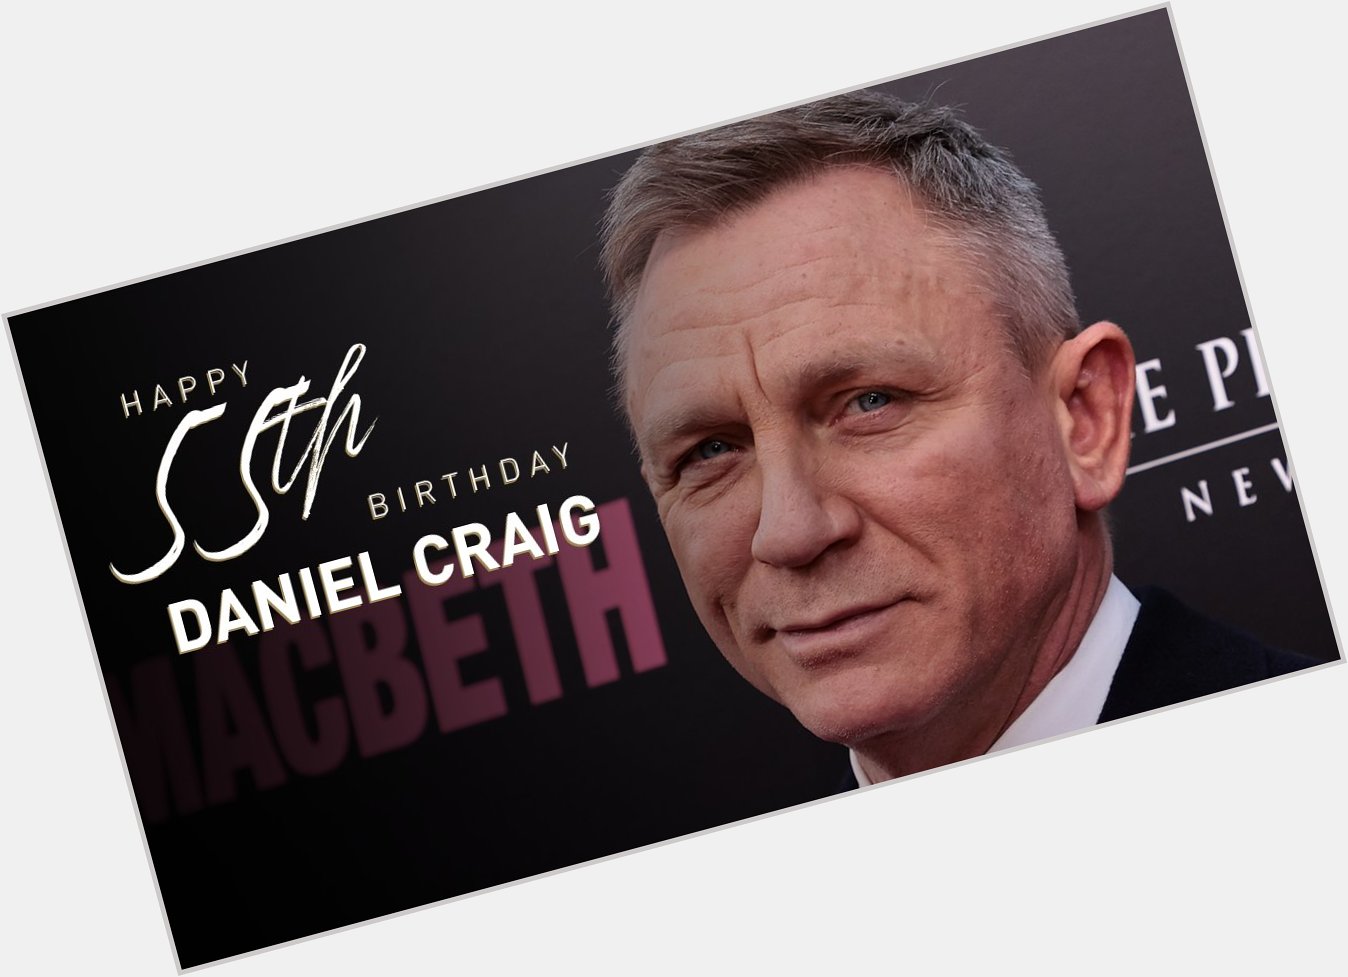 Happy 55th birthday Daniel Craig! 

Watch his tribute here:  